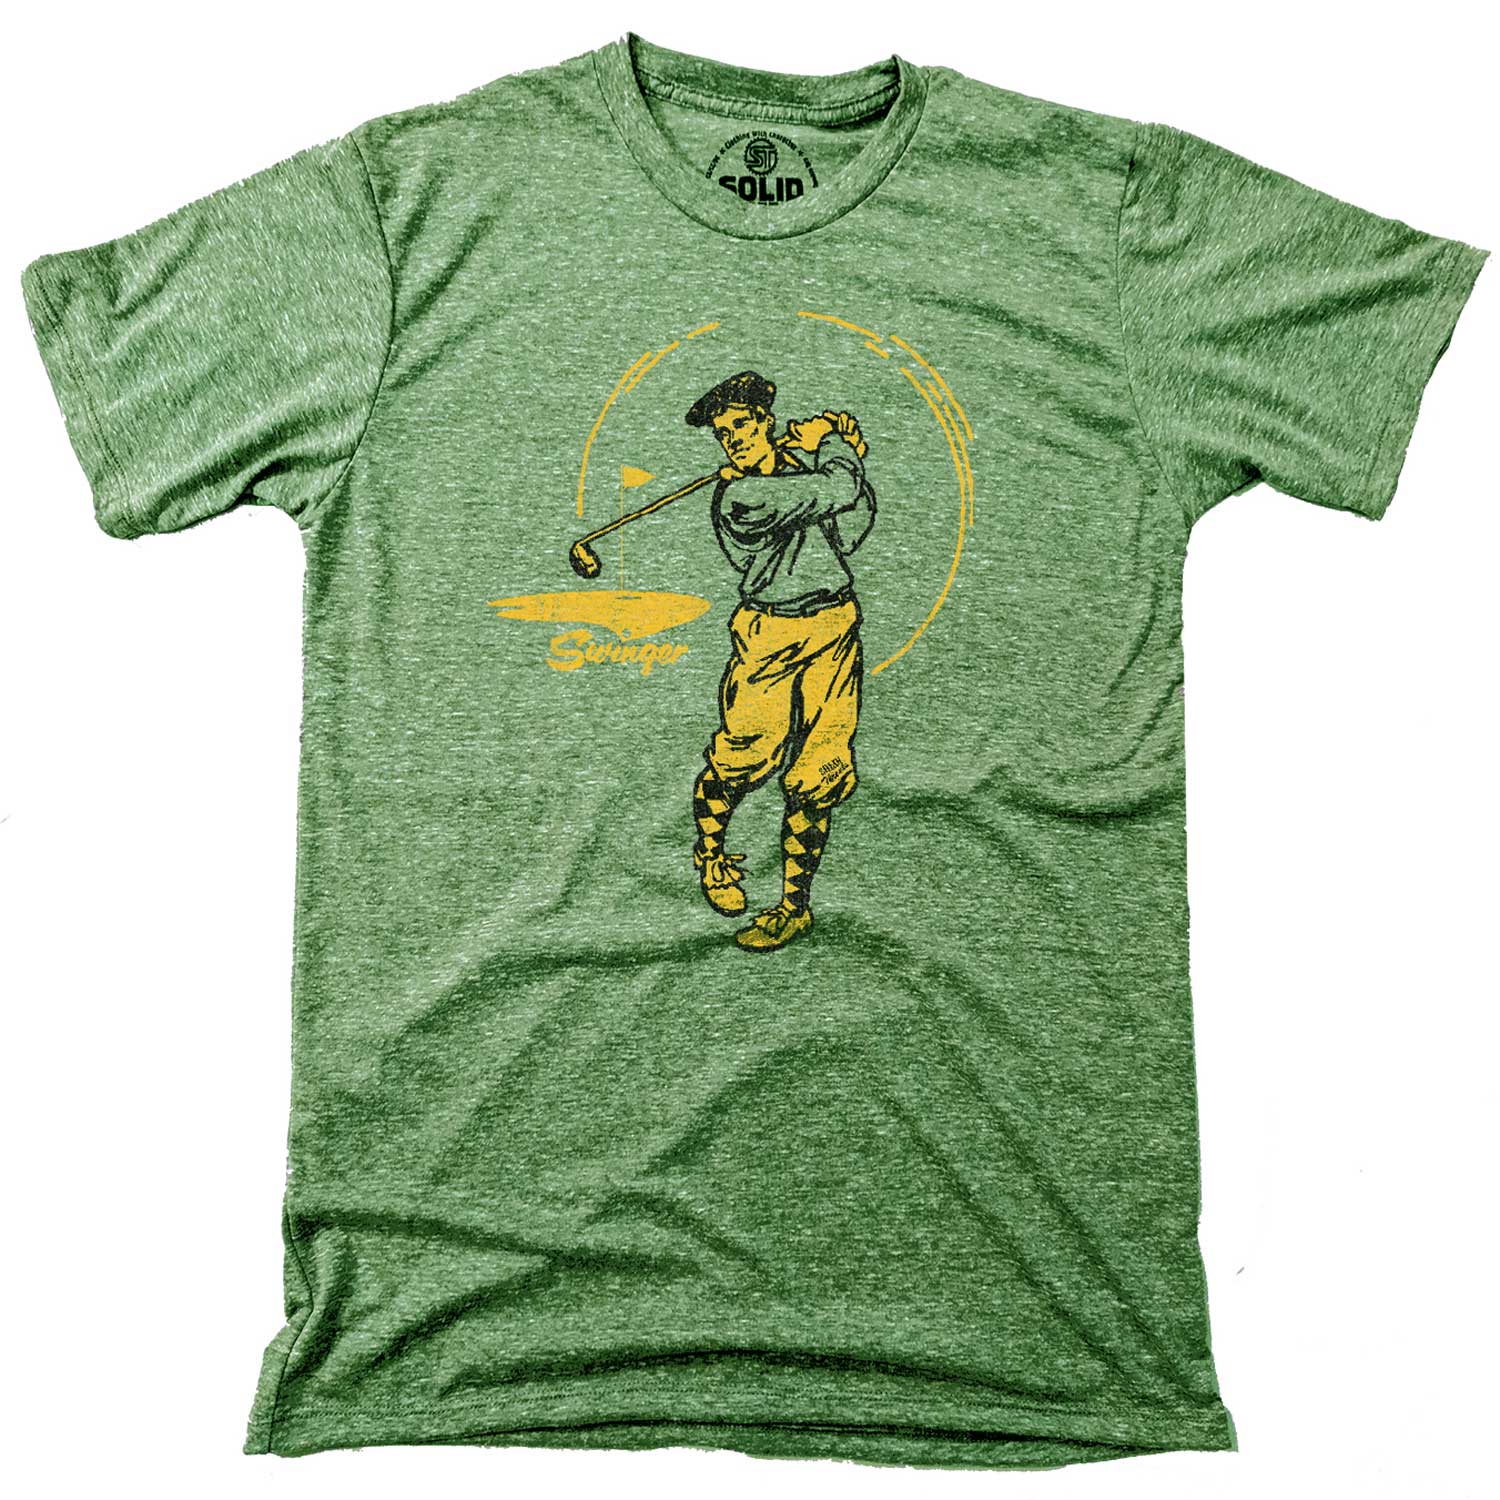 Captain Clutch Cool Graphic T-Shirt  Vintage Derek Jeter Tee - Solid  Threads